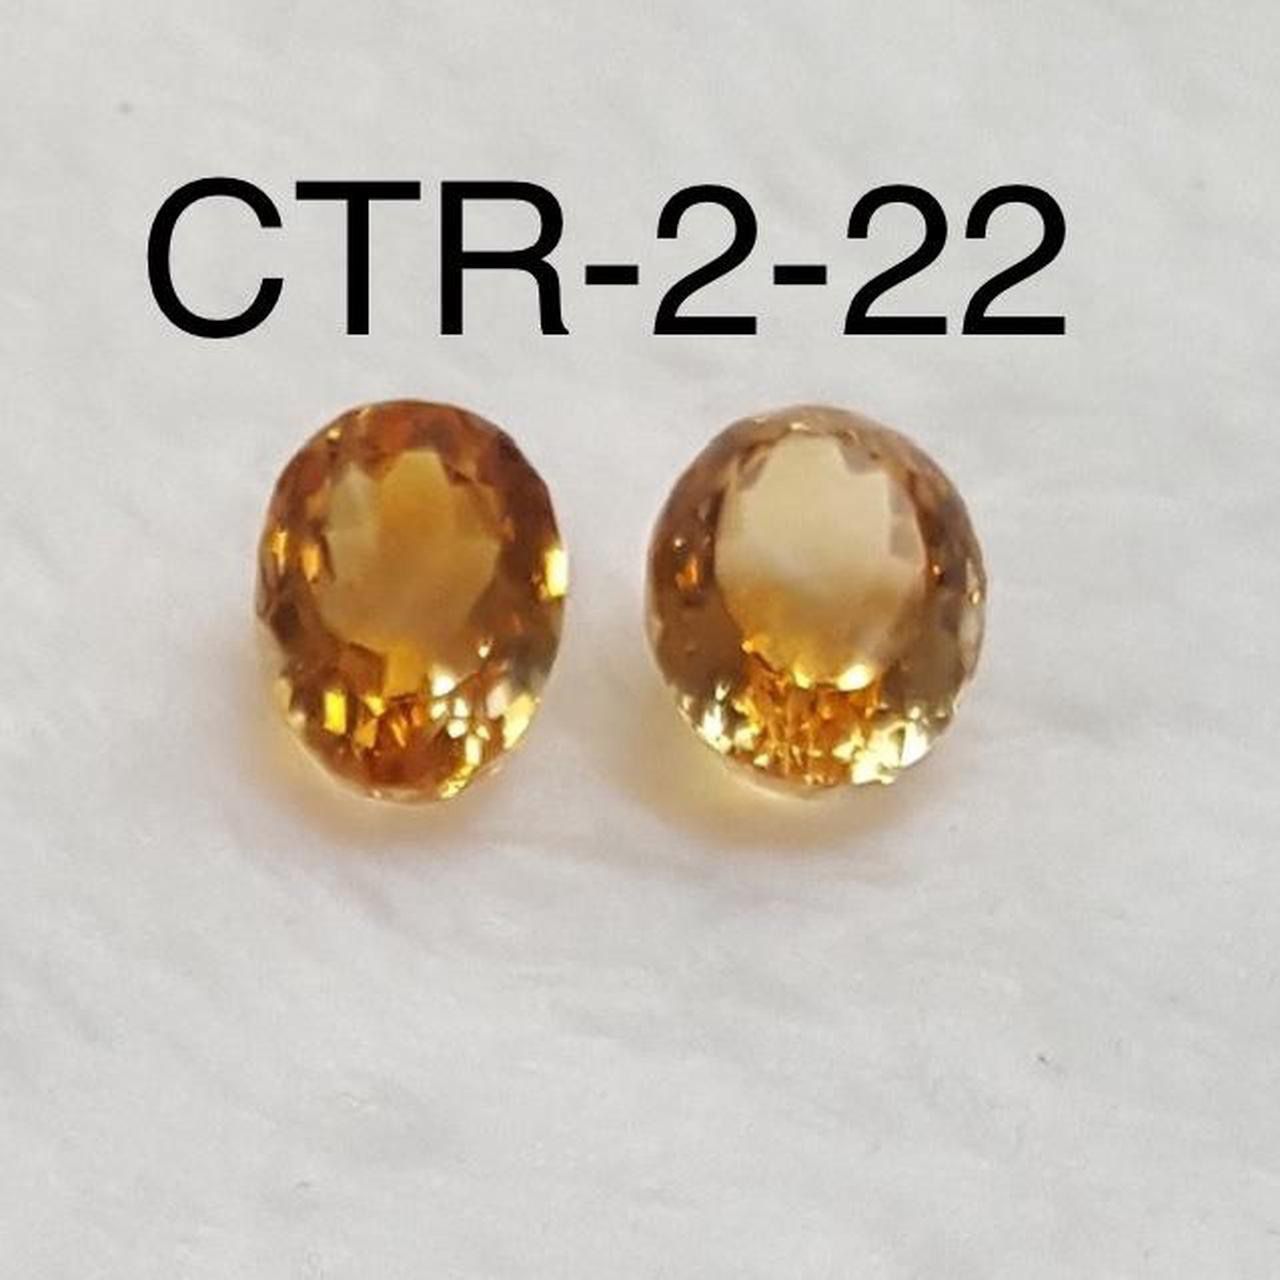 Citrine Facetted Oval Shape Semi-Precious Gemstone-2Pc-Lot-CTR-2-22/STK-119